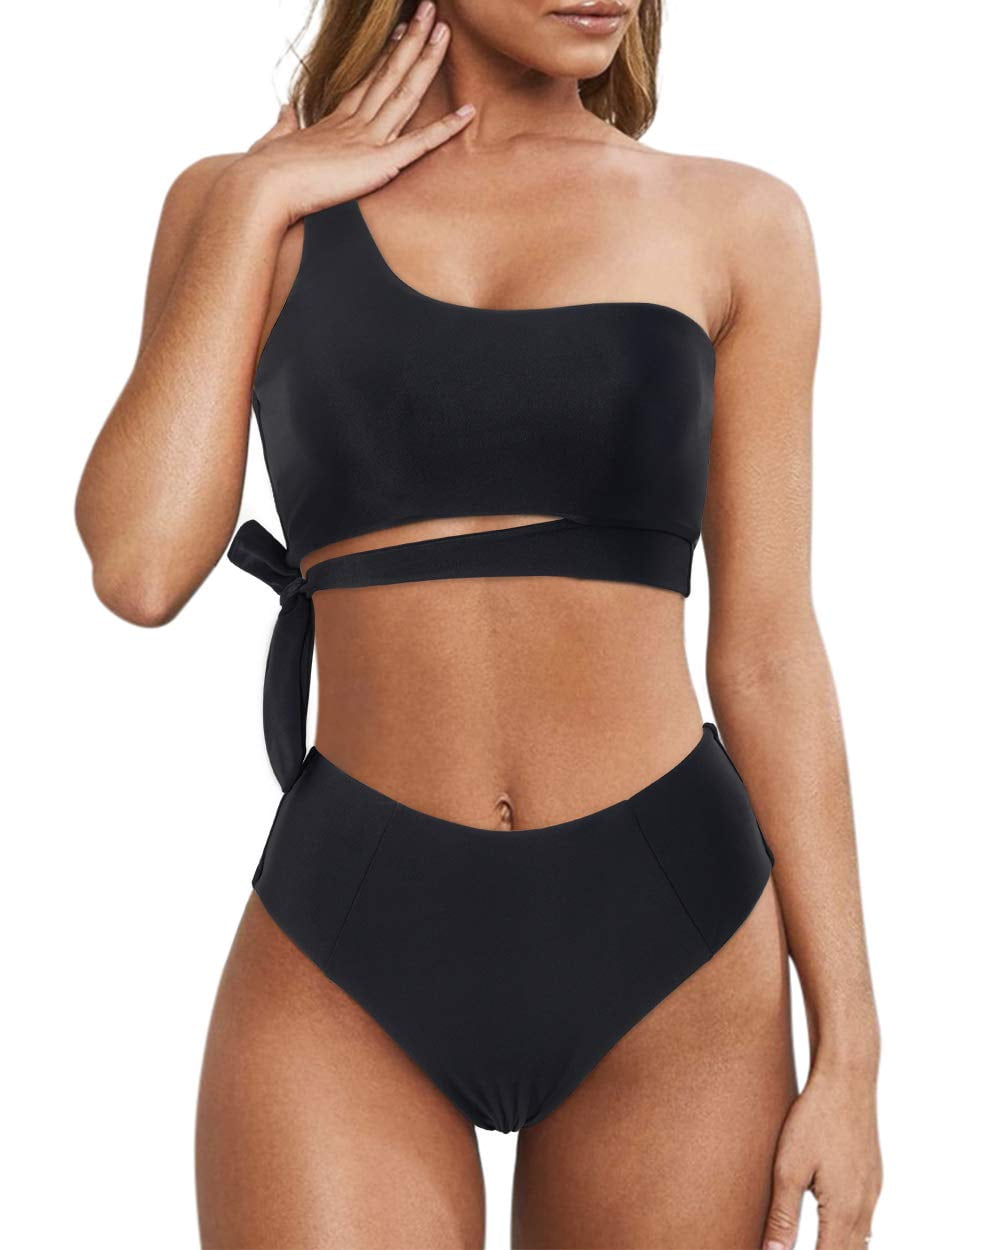 Viottiset Plus Size Swimsuit for Women Top Ruffled High Waist Swimwear Two Pieces Bathing Suits Bikini Sets 